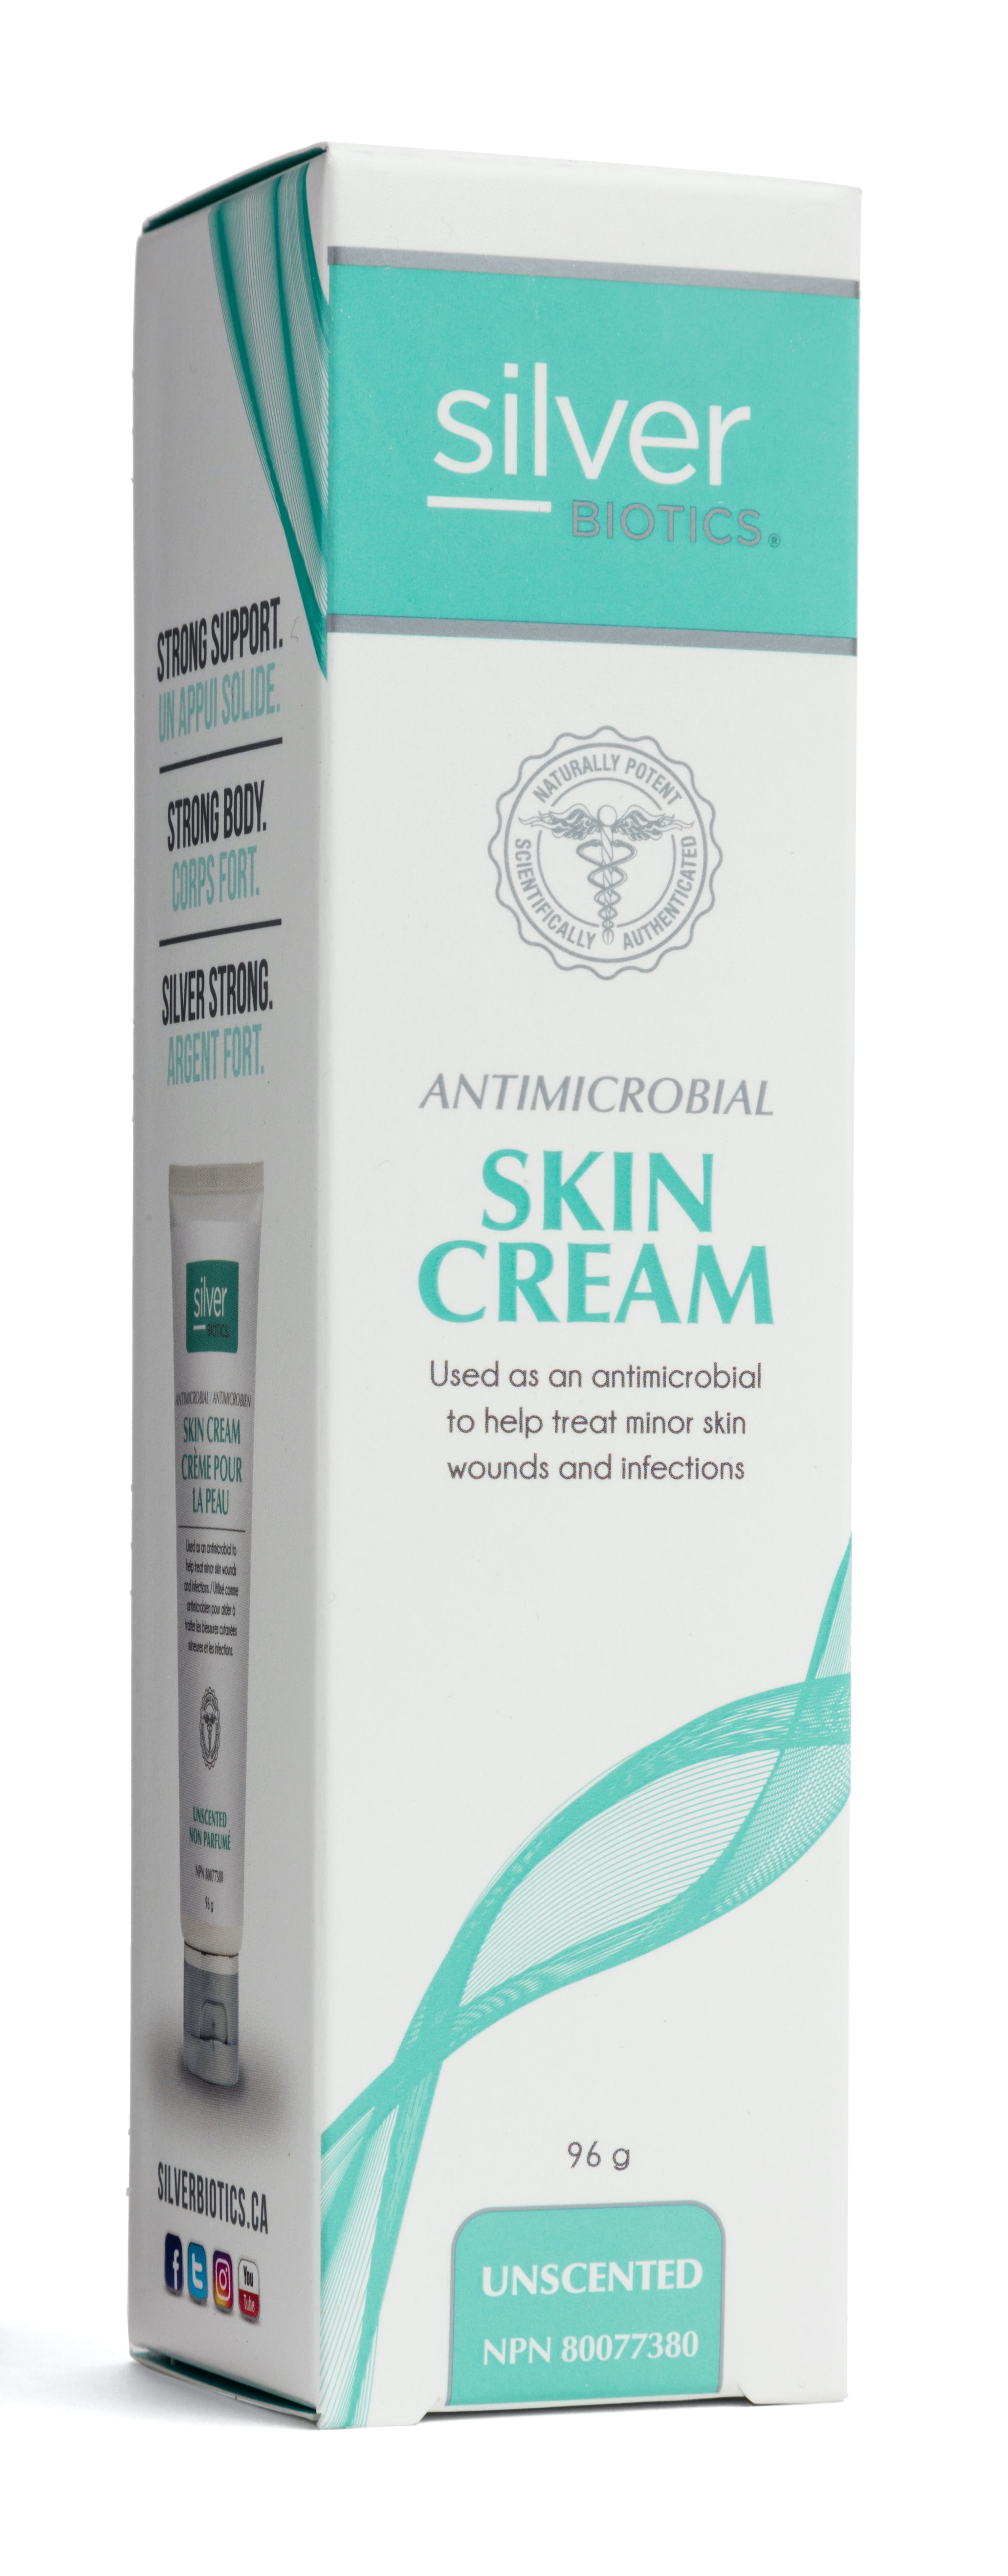 Silver Biotics Antimicrobial Skin Cream Unscented 96g